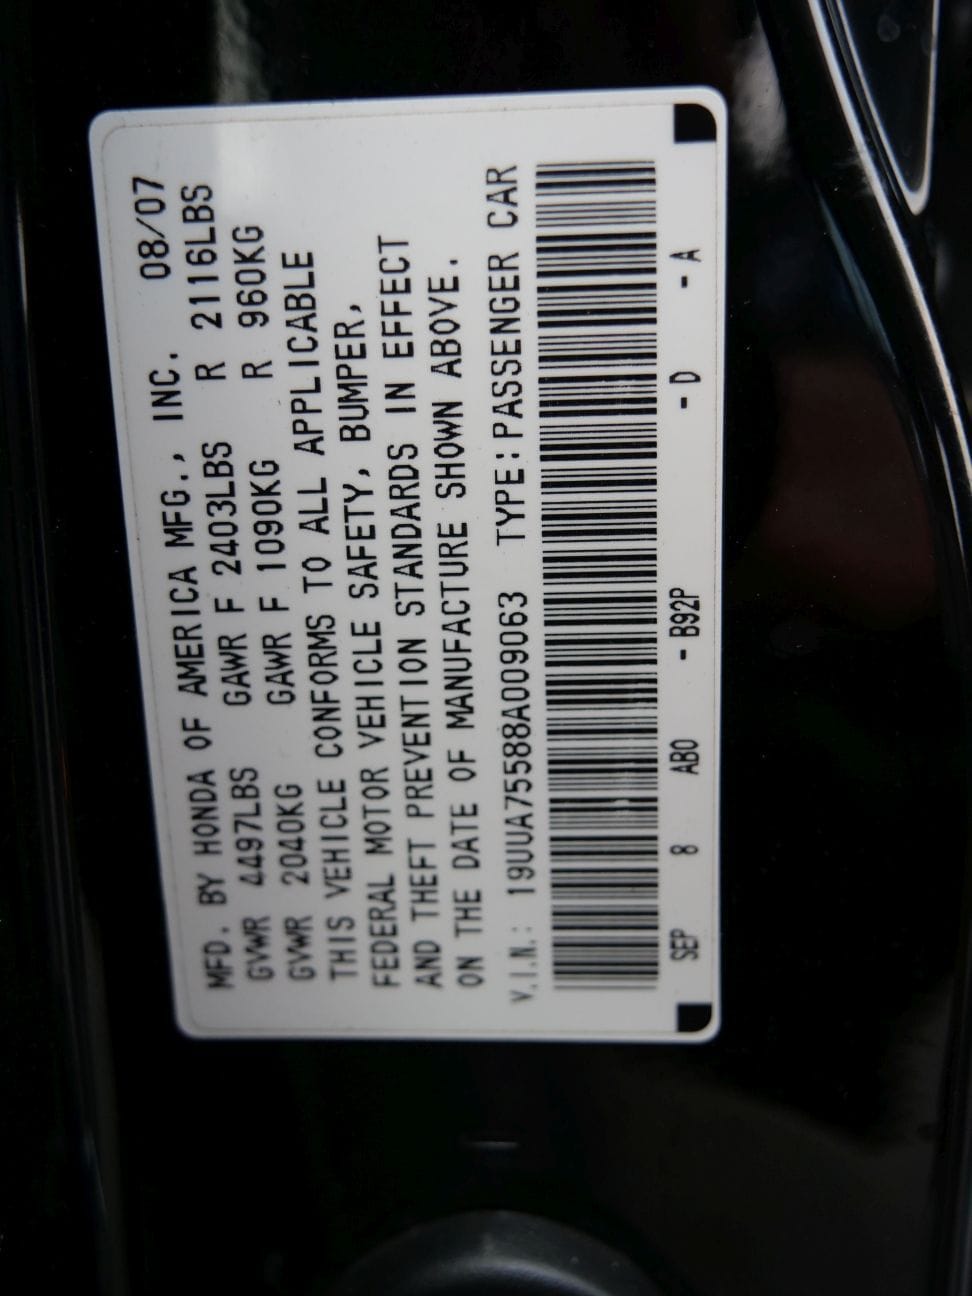 2008 Acura TL - FS: 2008 Acura TL Type S, 6MT, NBP ext, Silver/Ebony int,  85k... - Used - VIN 19UUA75588A009063 - 85,500 Miles - 6 cyl - 2WD - Manual - Sedan - Black - Torrance, CA 90503, United States